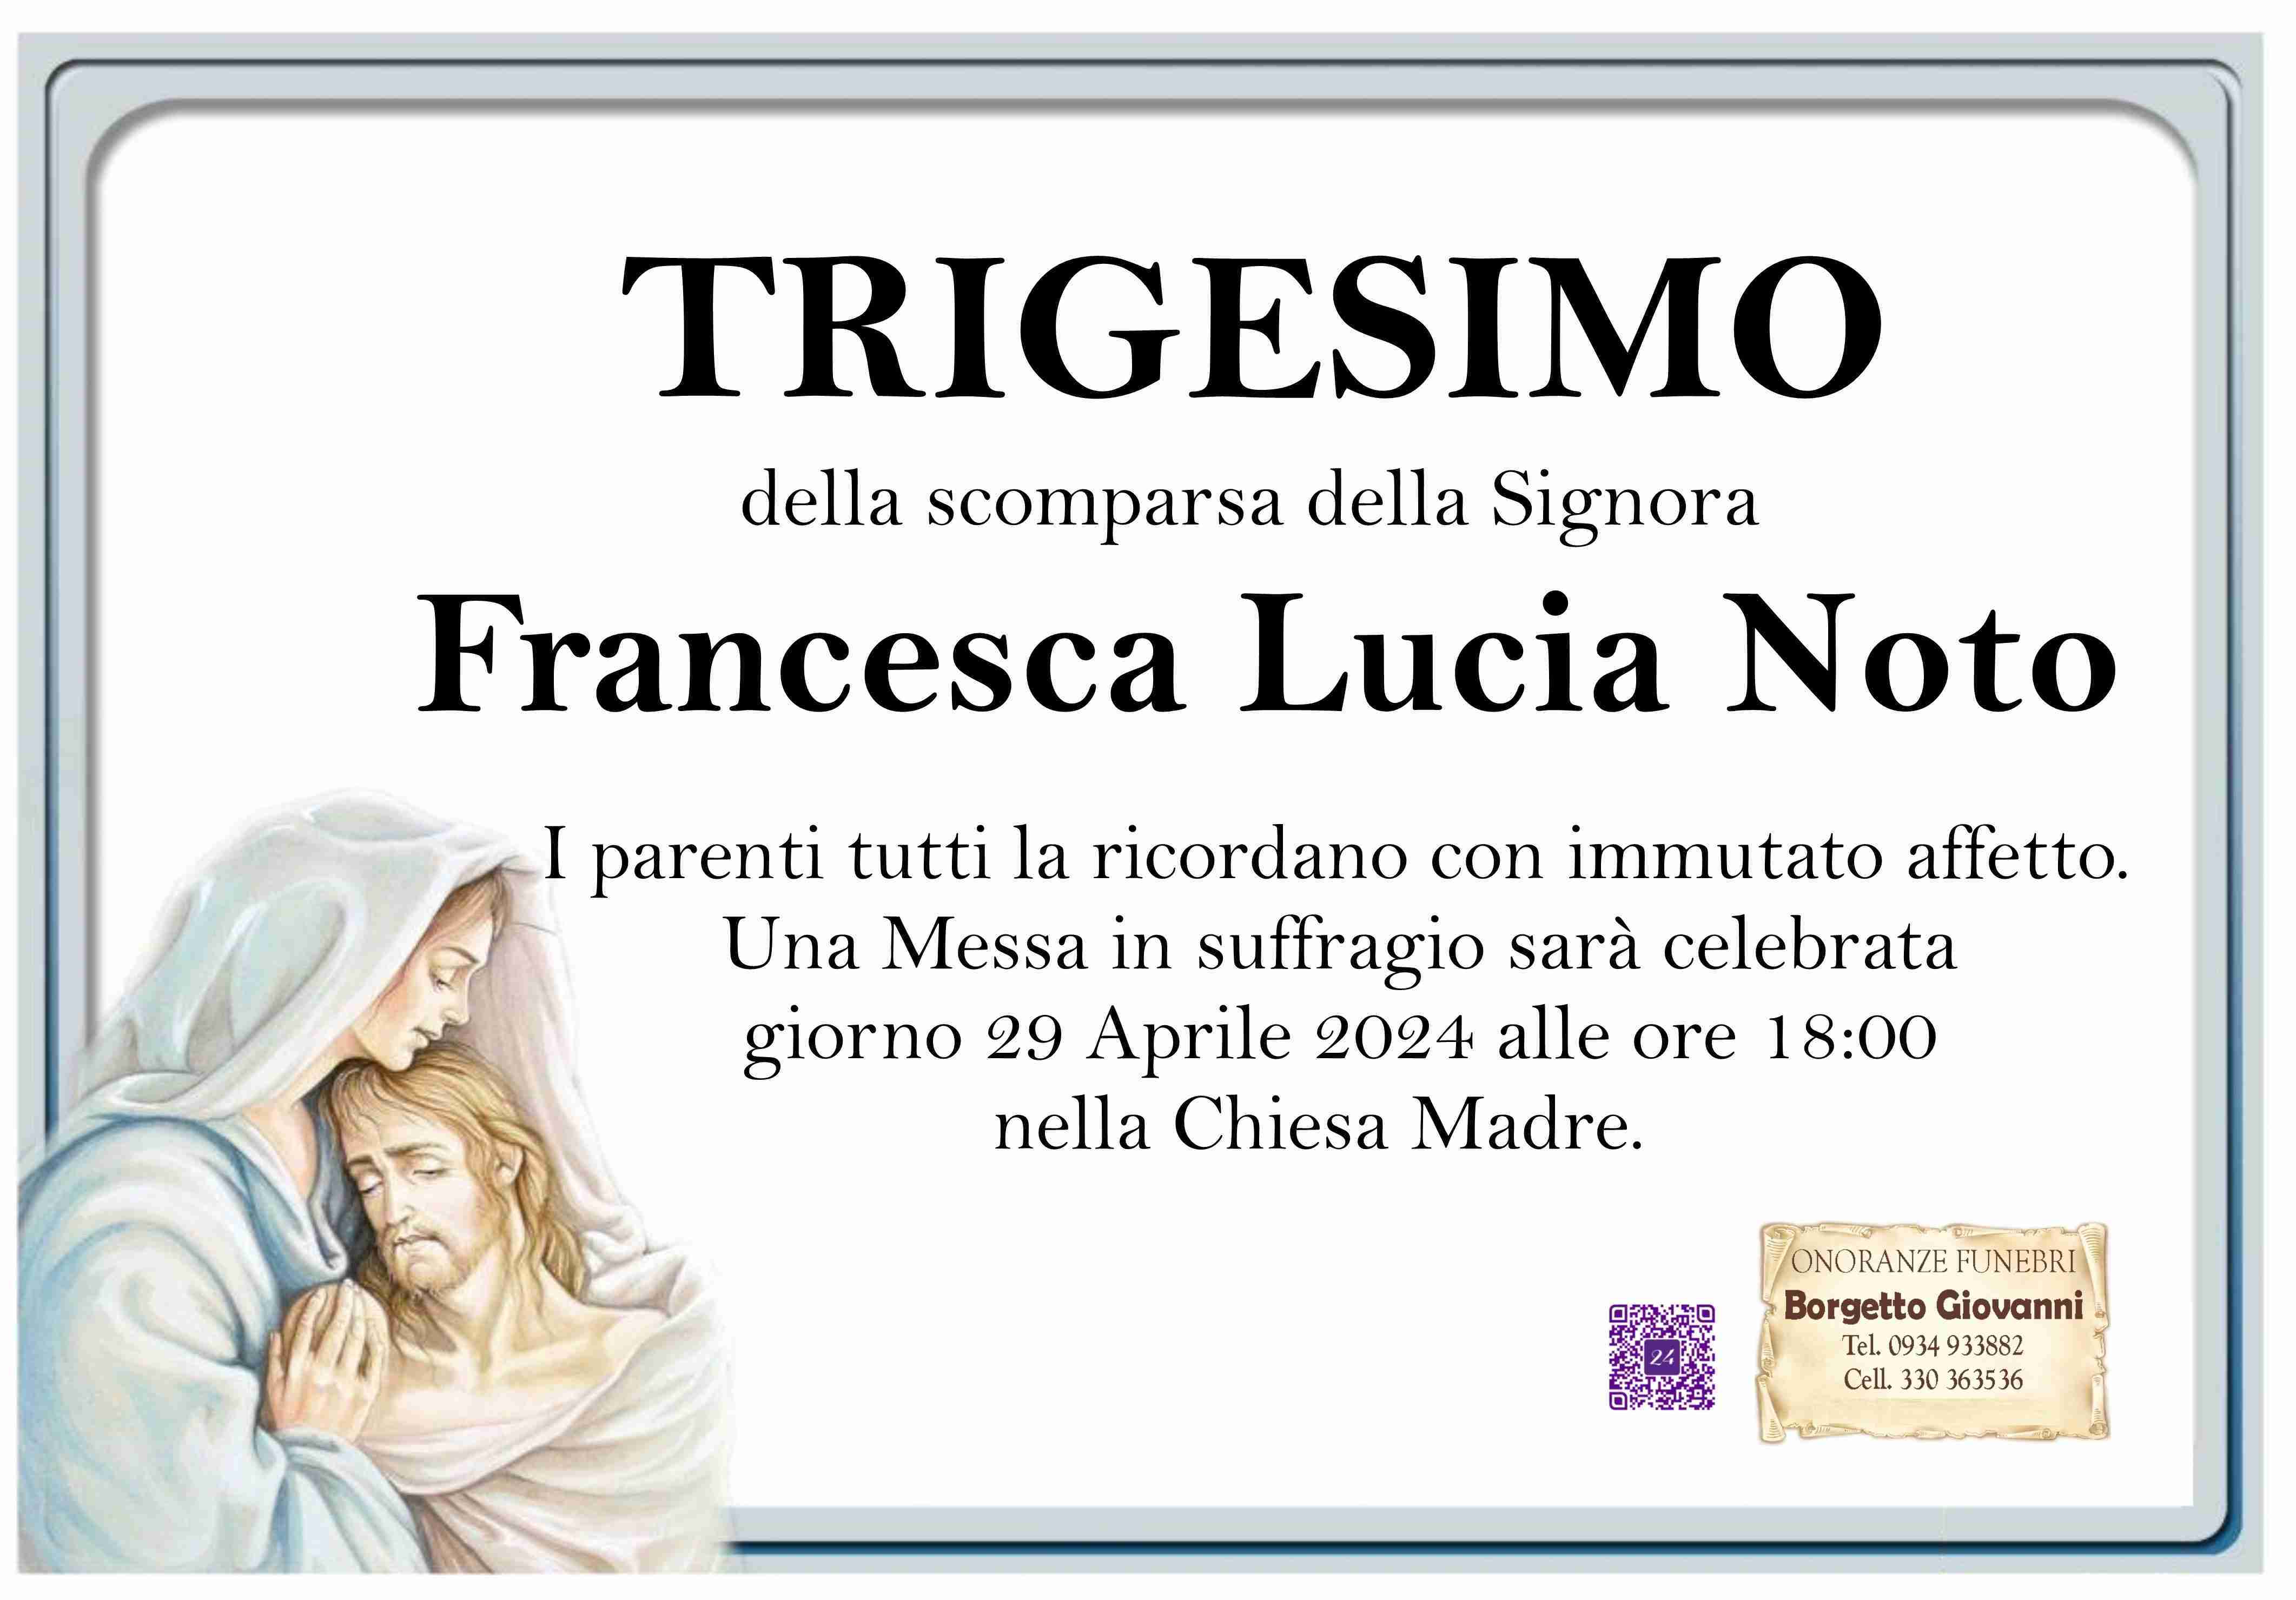 Francesca Lucia Noto